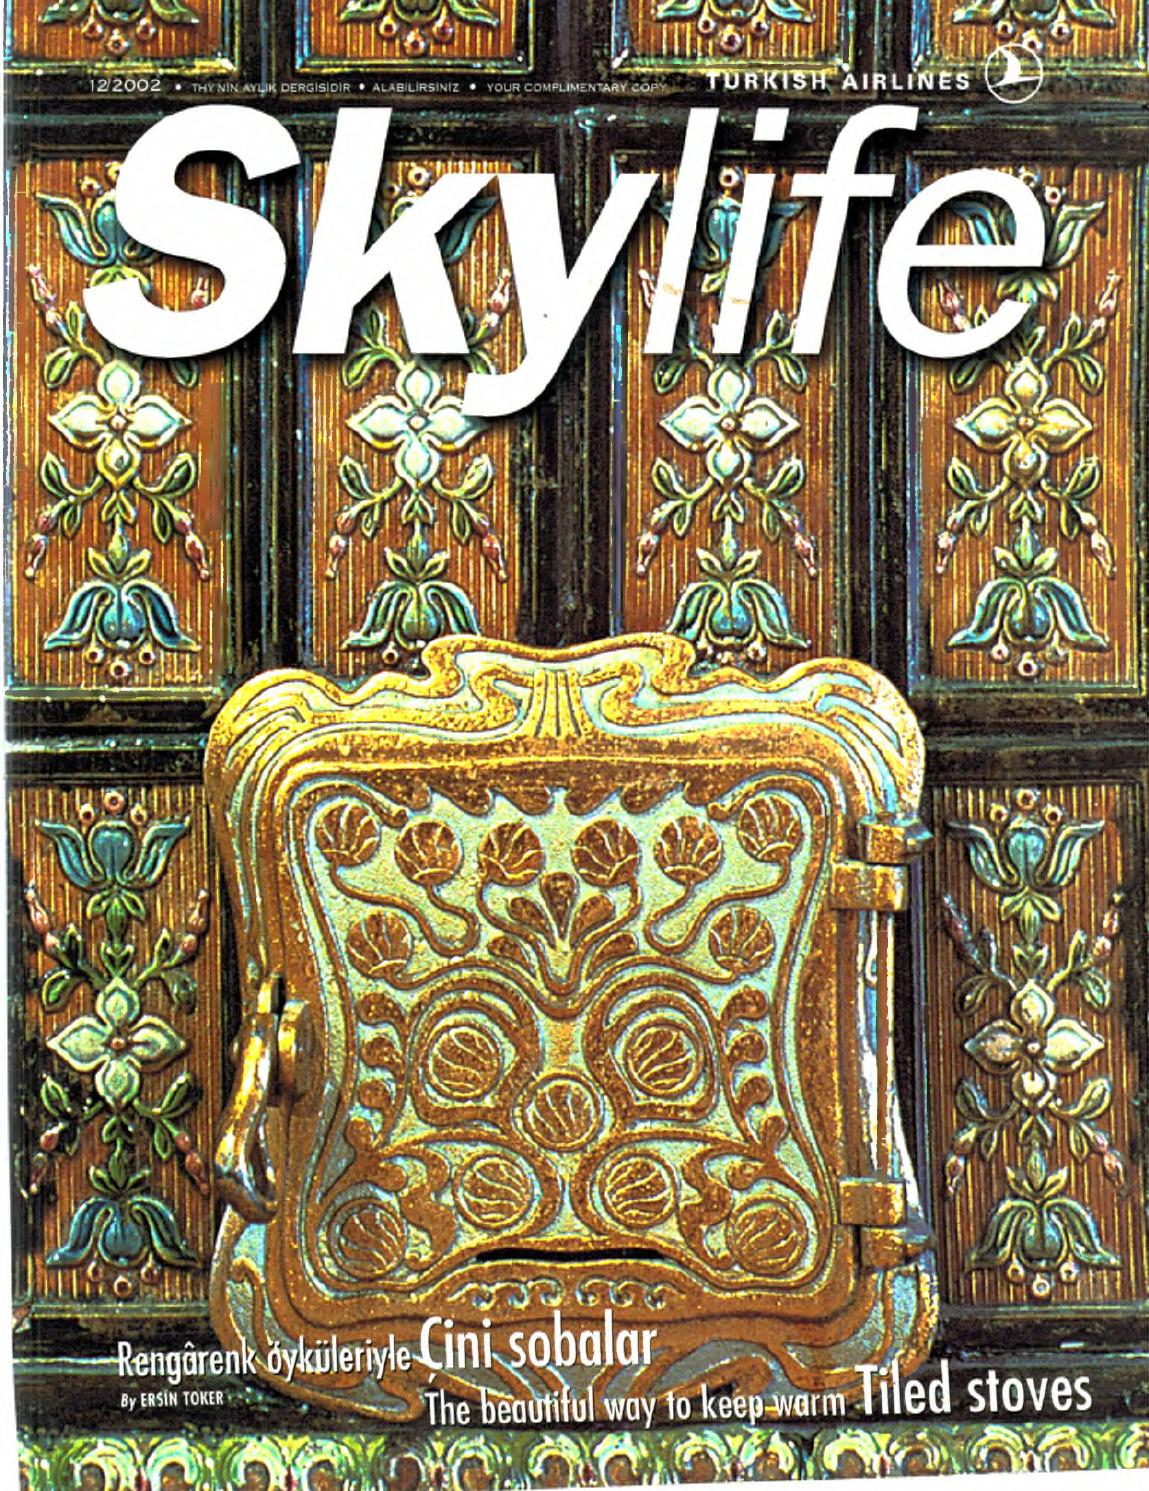 2002 12 By Skylife Magazine - Issuu intérieur Salon De Jardin Discount